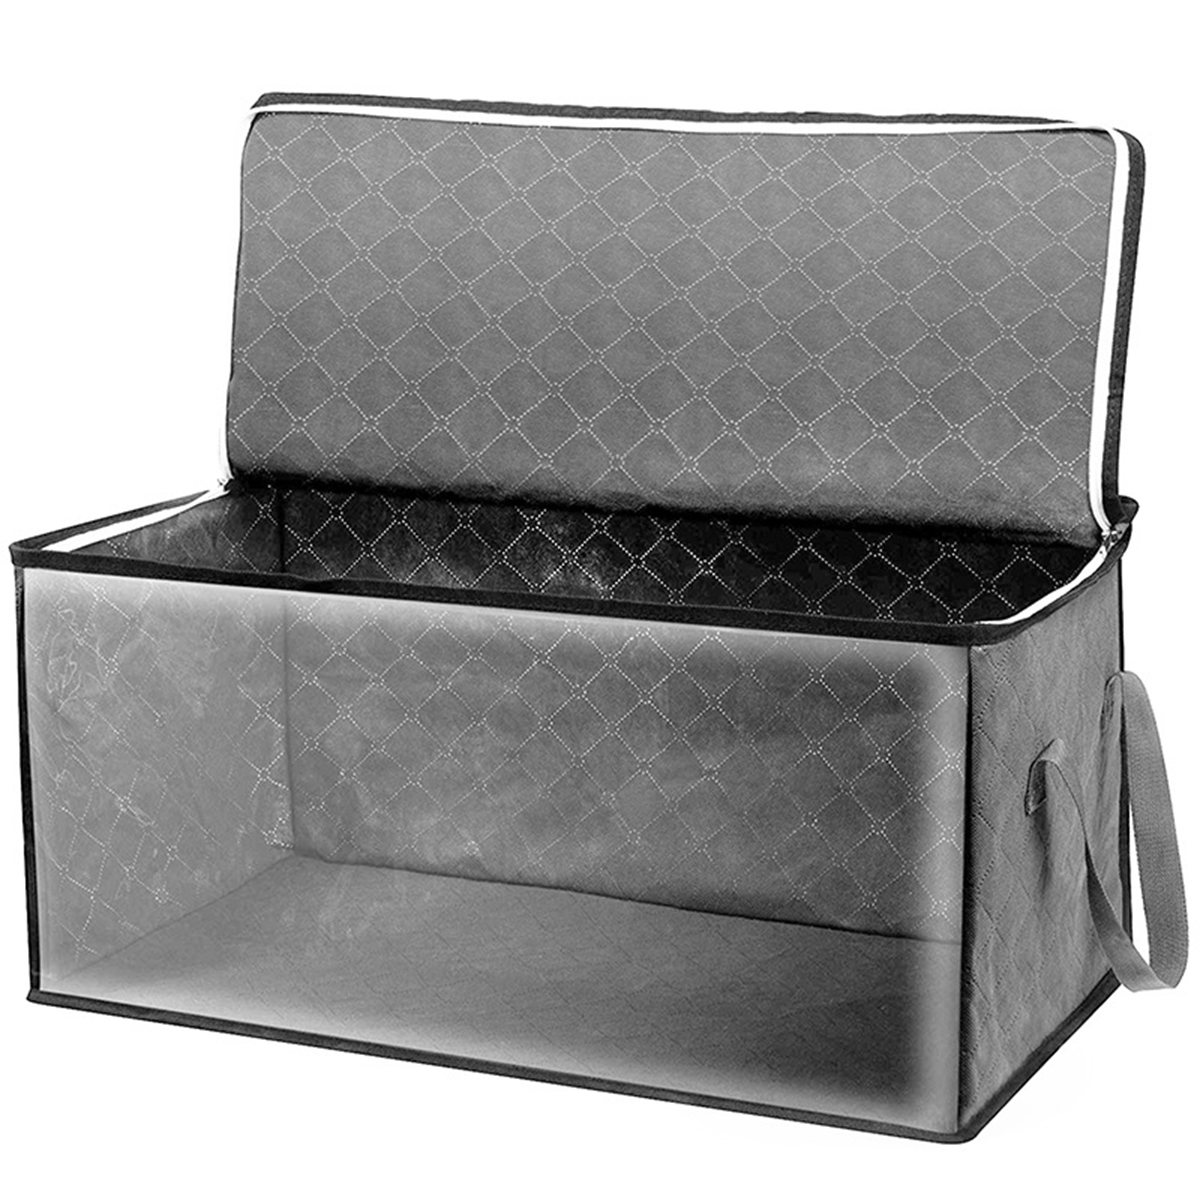 1-Pcs-Clothes-Storage-Bag-Foldable-Zipper-Organizer-Pillows-Quilt-Bedding-Bag-Luggage-Bag-1653003-3